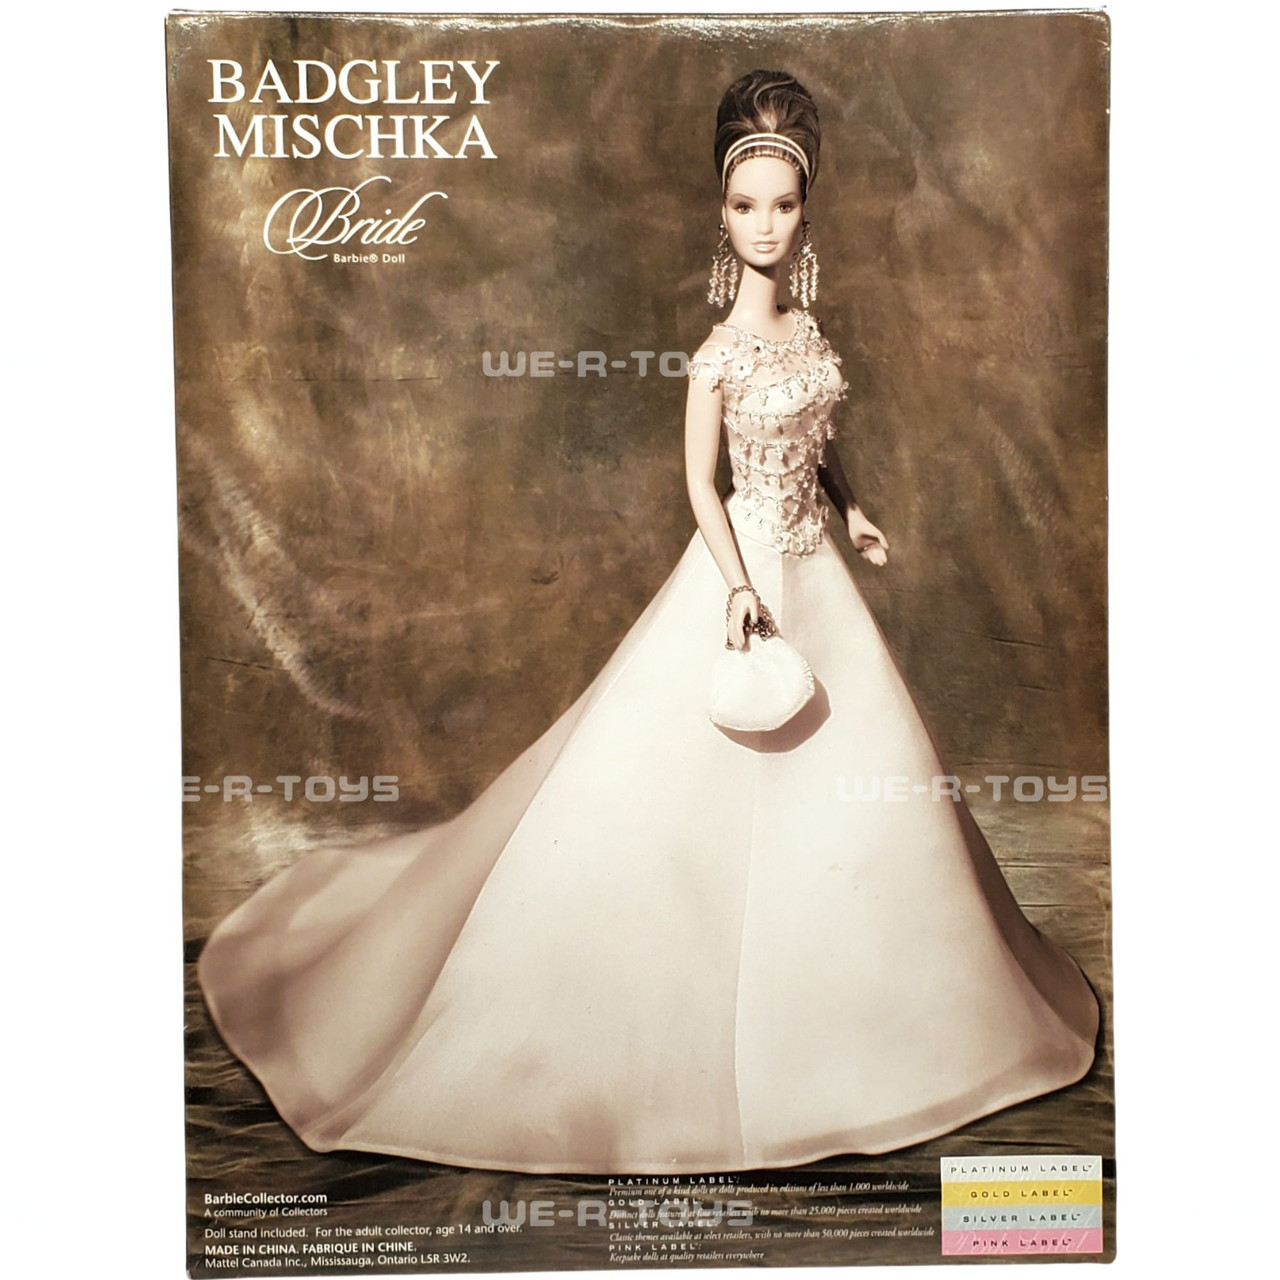 Badgley Mischka Bride Limited Edition Gold Label Barbie Doll 2003 